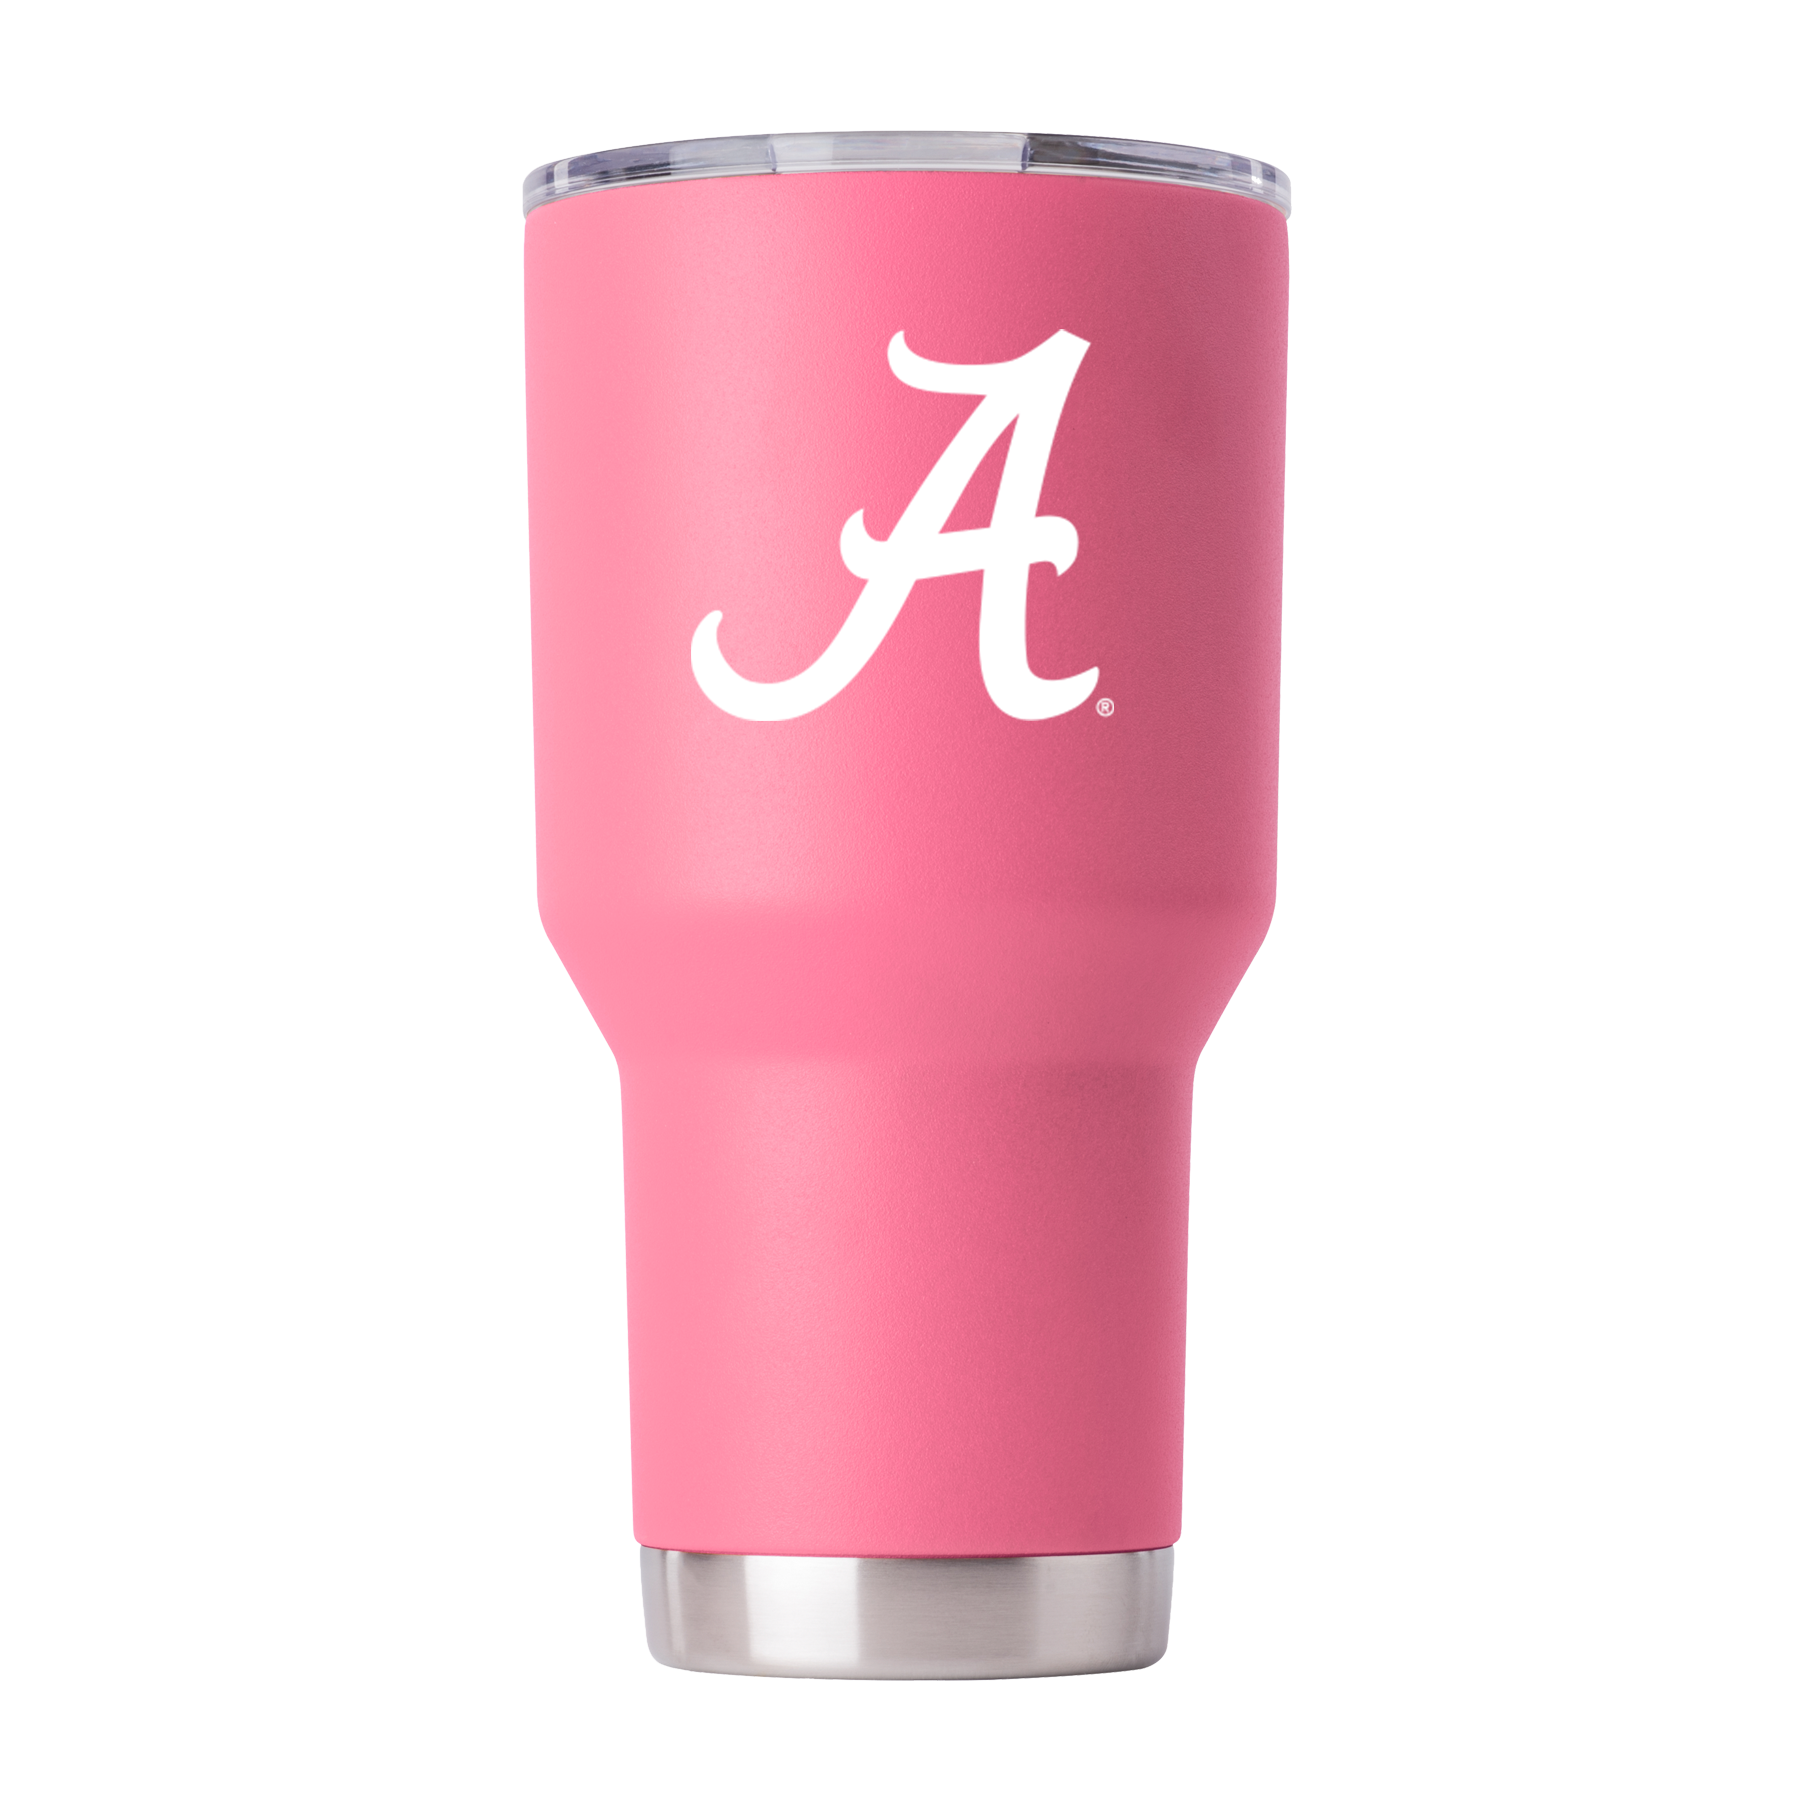 Alabama 30oz Pink Tumbler